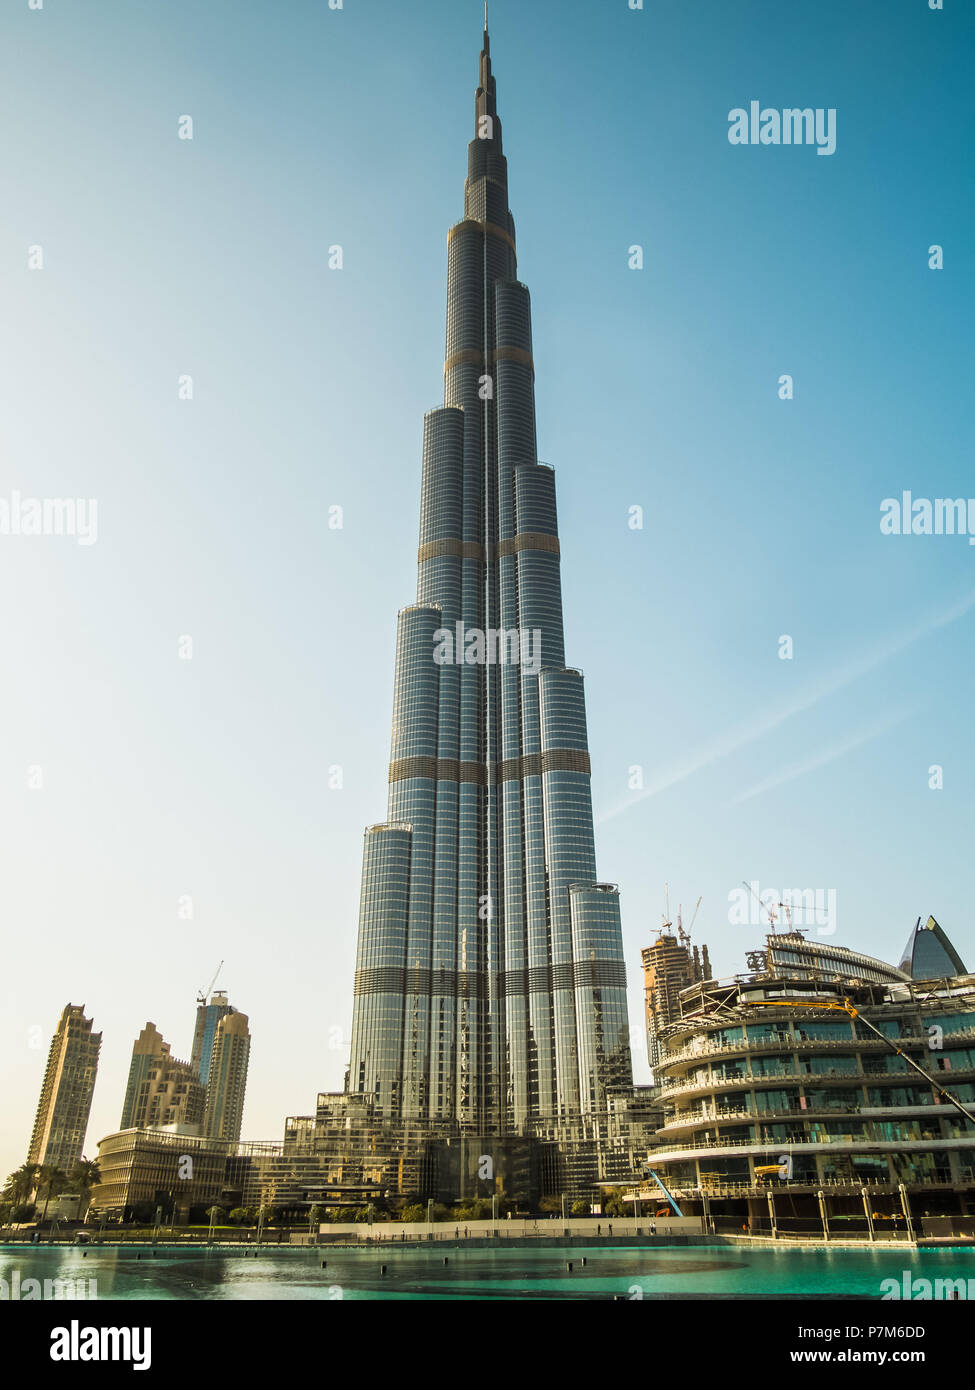 Burj Khalifa, the tallest man made structure in the world at 828 metres, Dubai, United Arab Emirates, Stock Photo